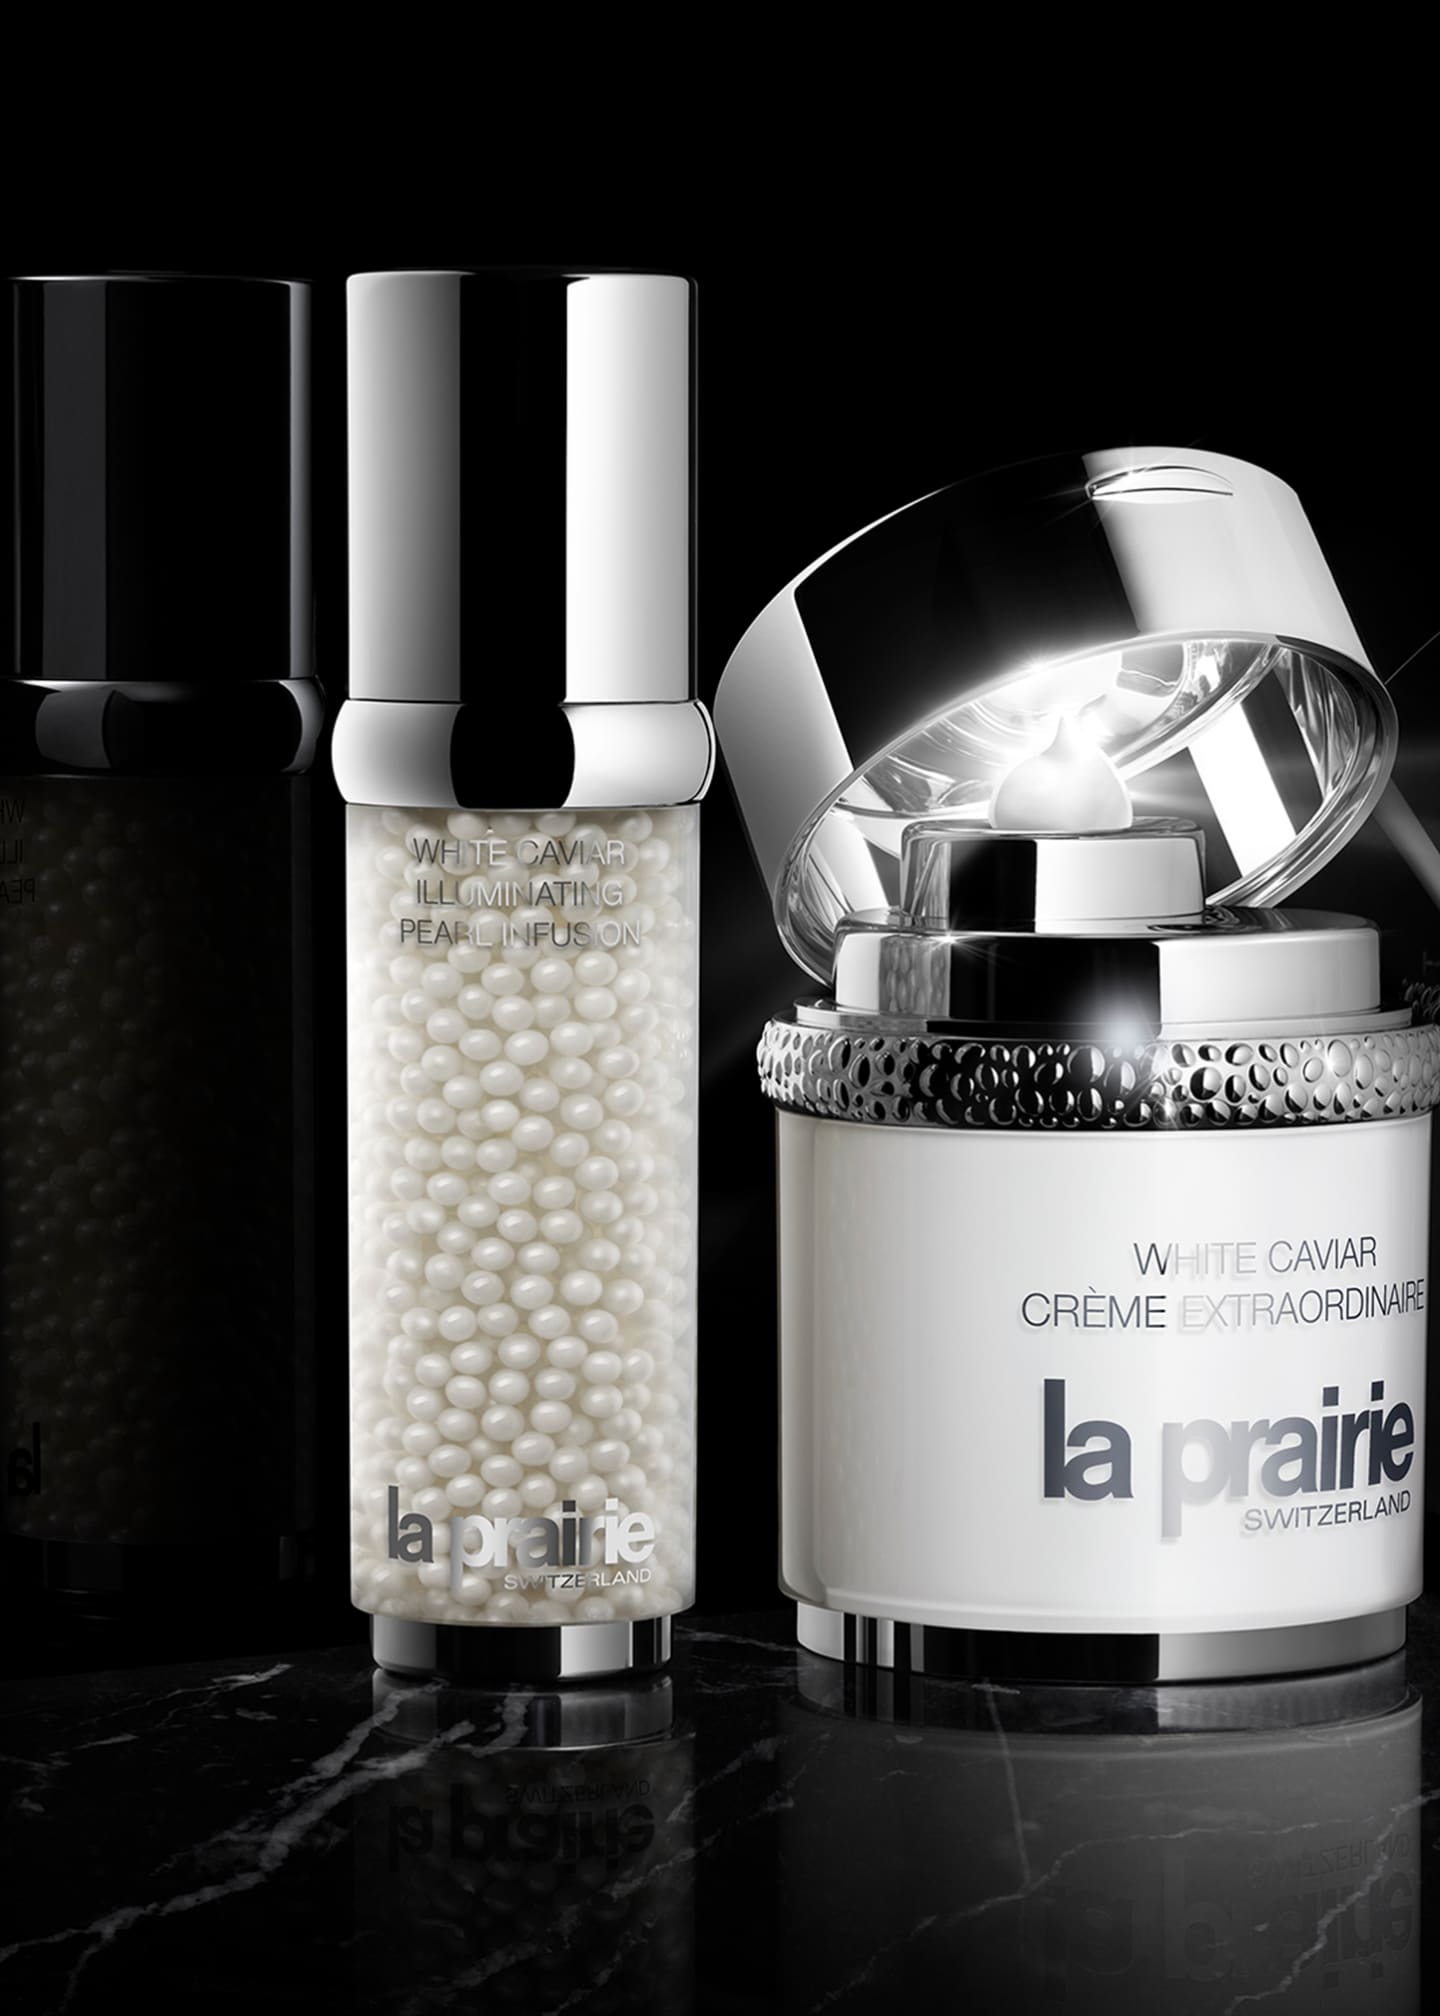 La Prairie 2 oz. White Caviar Creme Extraordinaire Illuminating Face Cream Image 4 of 4